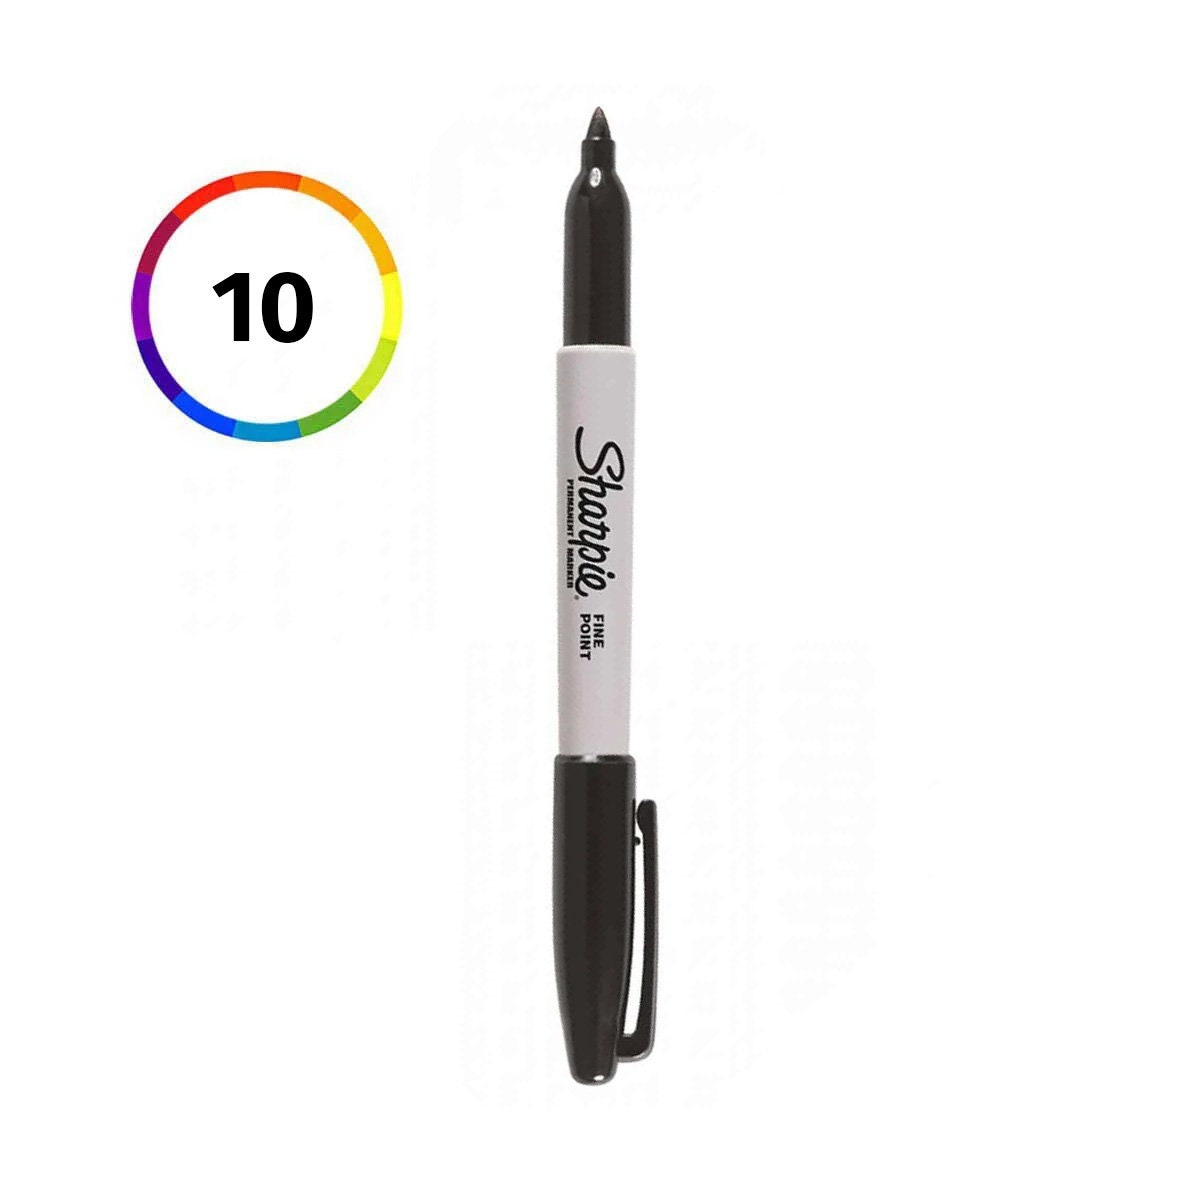 Silver Sharpie Paint Marker Sharpie Oil Based Marker, Extra Fine Tip Pen  Illustration, Drawing, Blending, Shading, Arts, Craft 